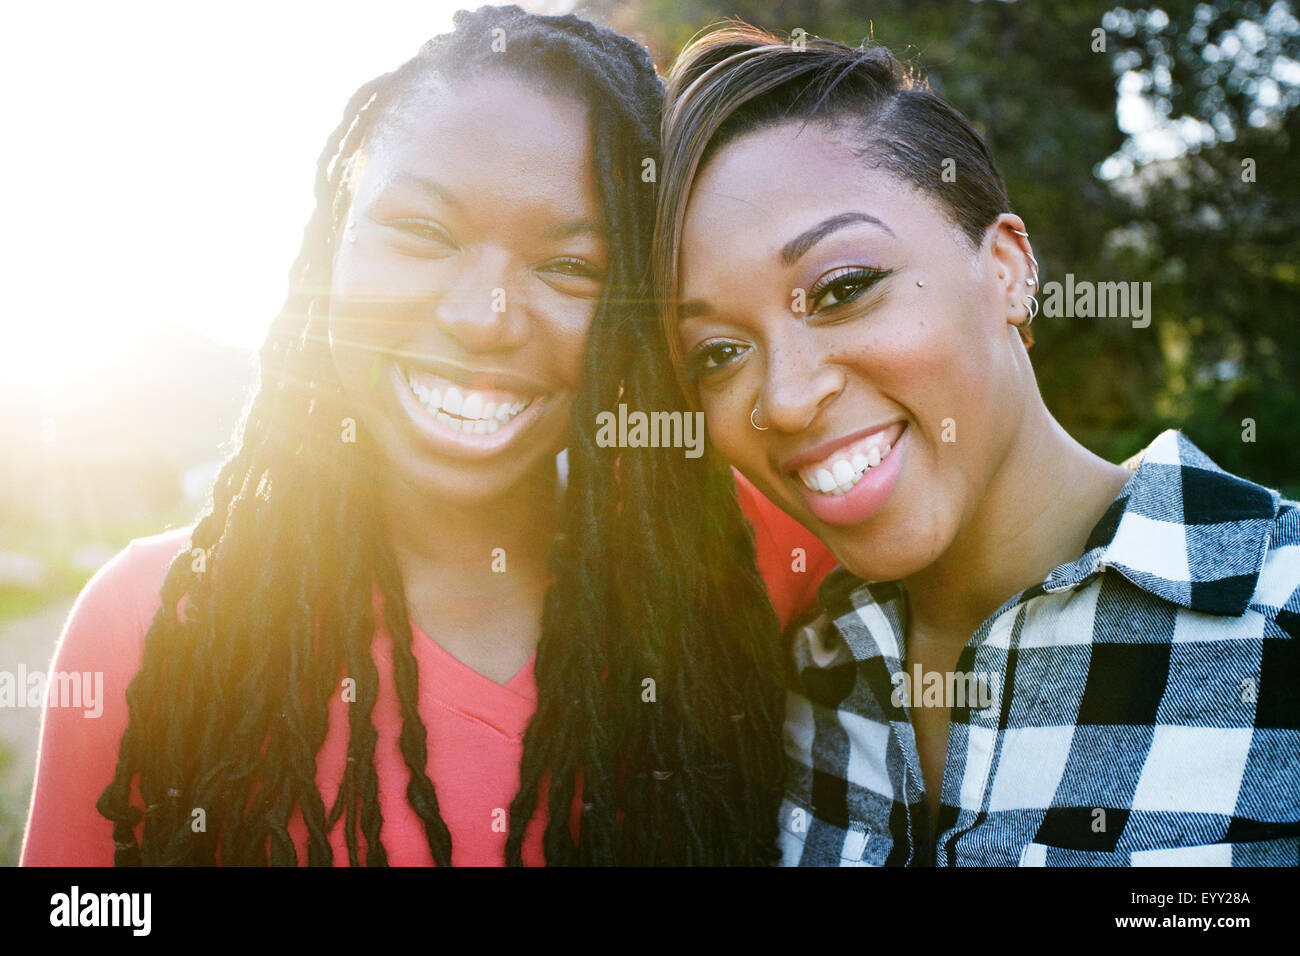 Smiling women hugging outdoors Stock Photo